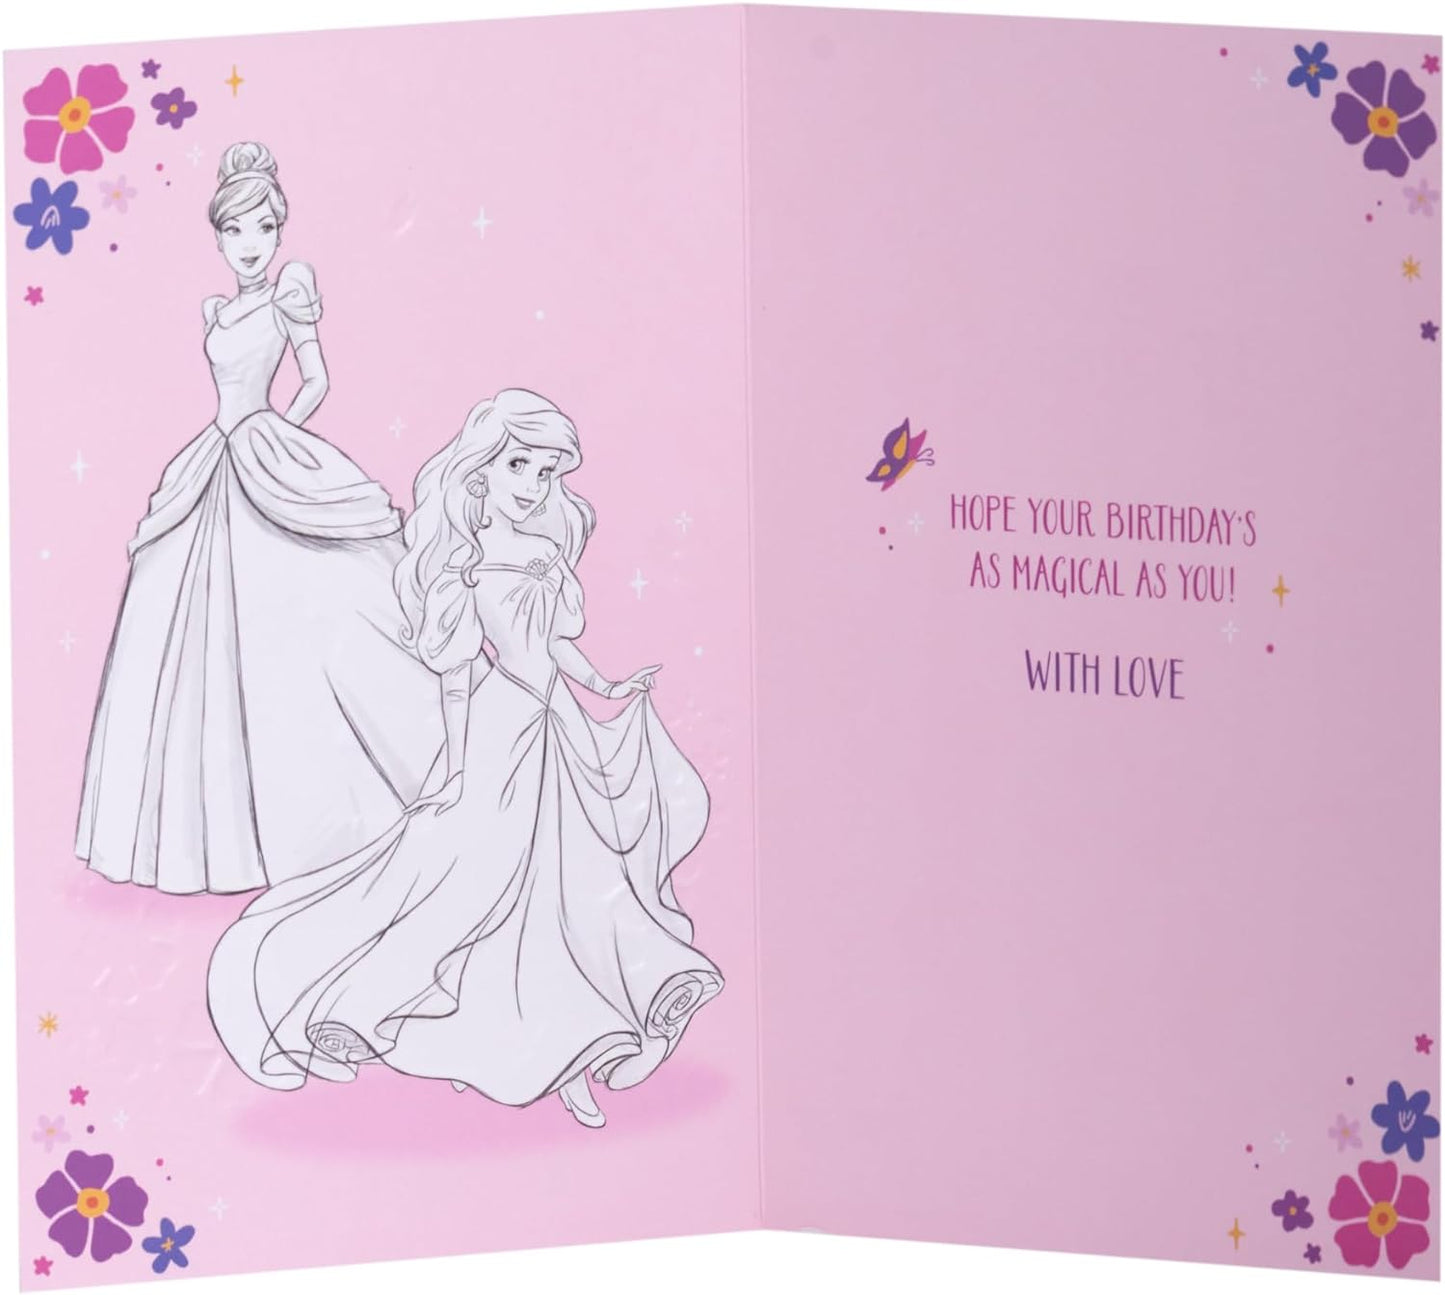 Disney Princess Granddaughter 3rd Birthday Card